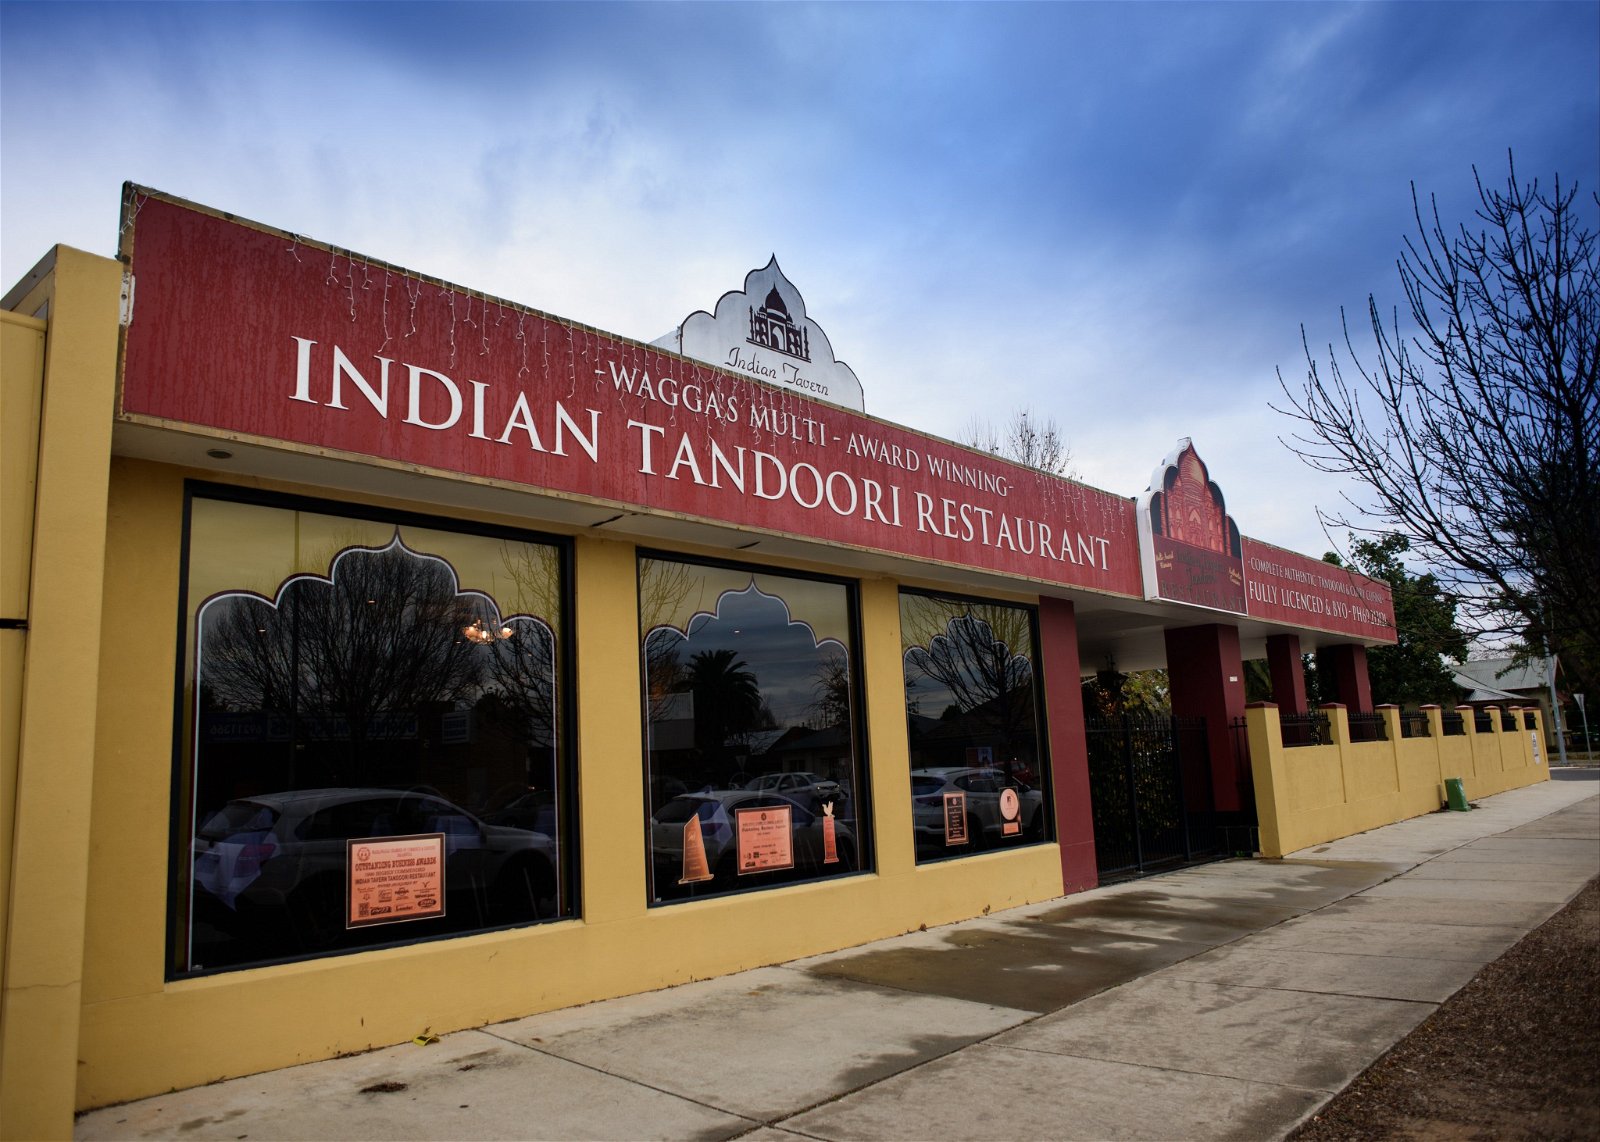 Indian Tavern Tandoori - Great Ocean Road Tourism